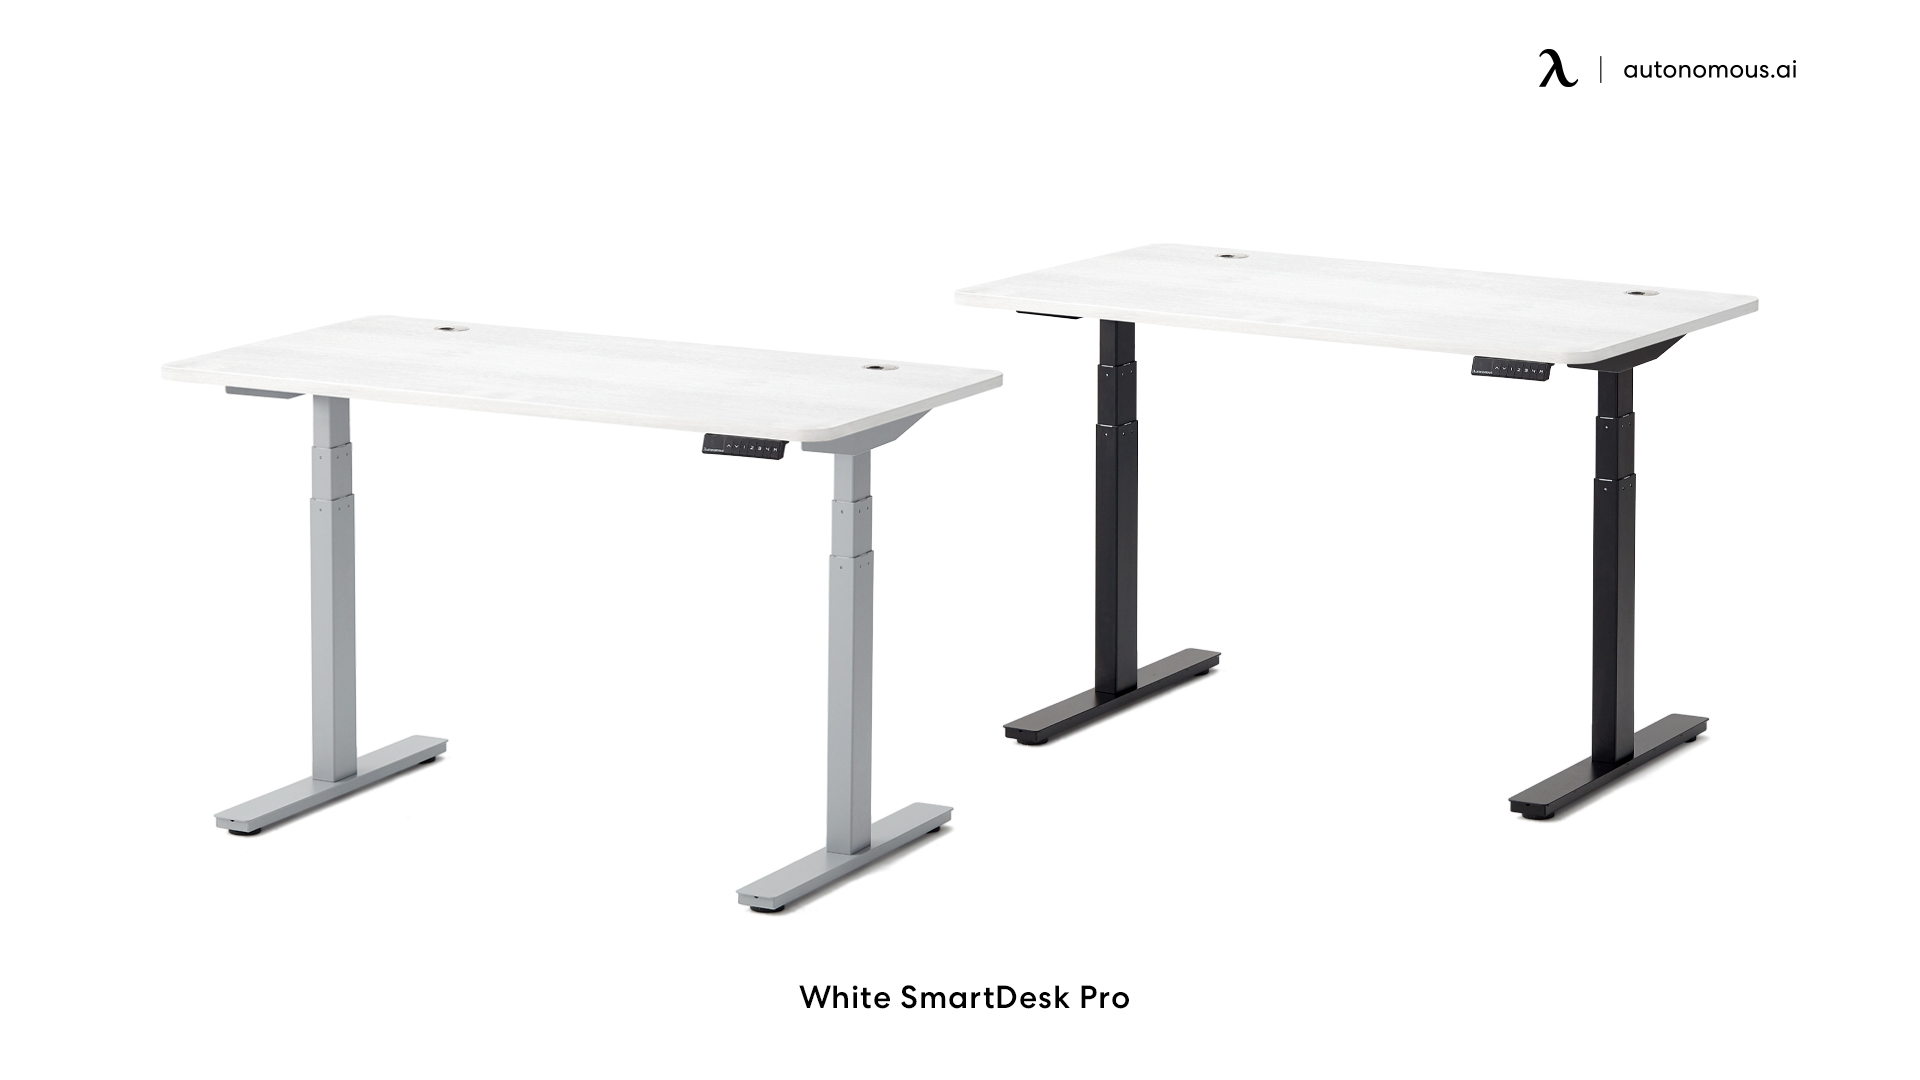 SmartDesk Pro white conference room table